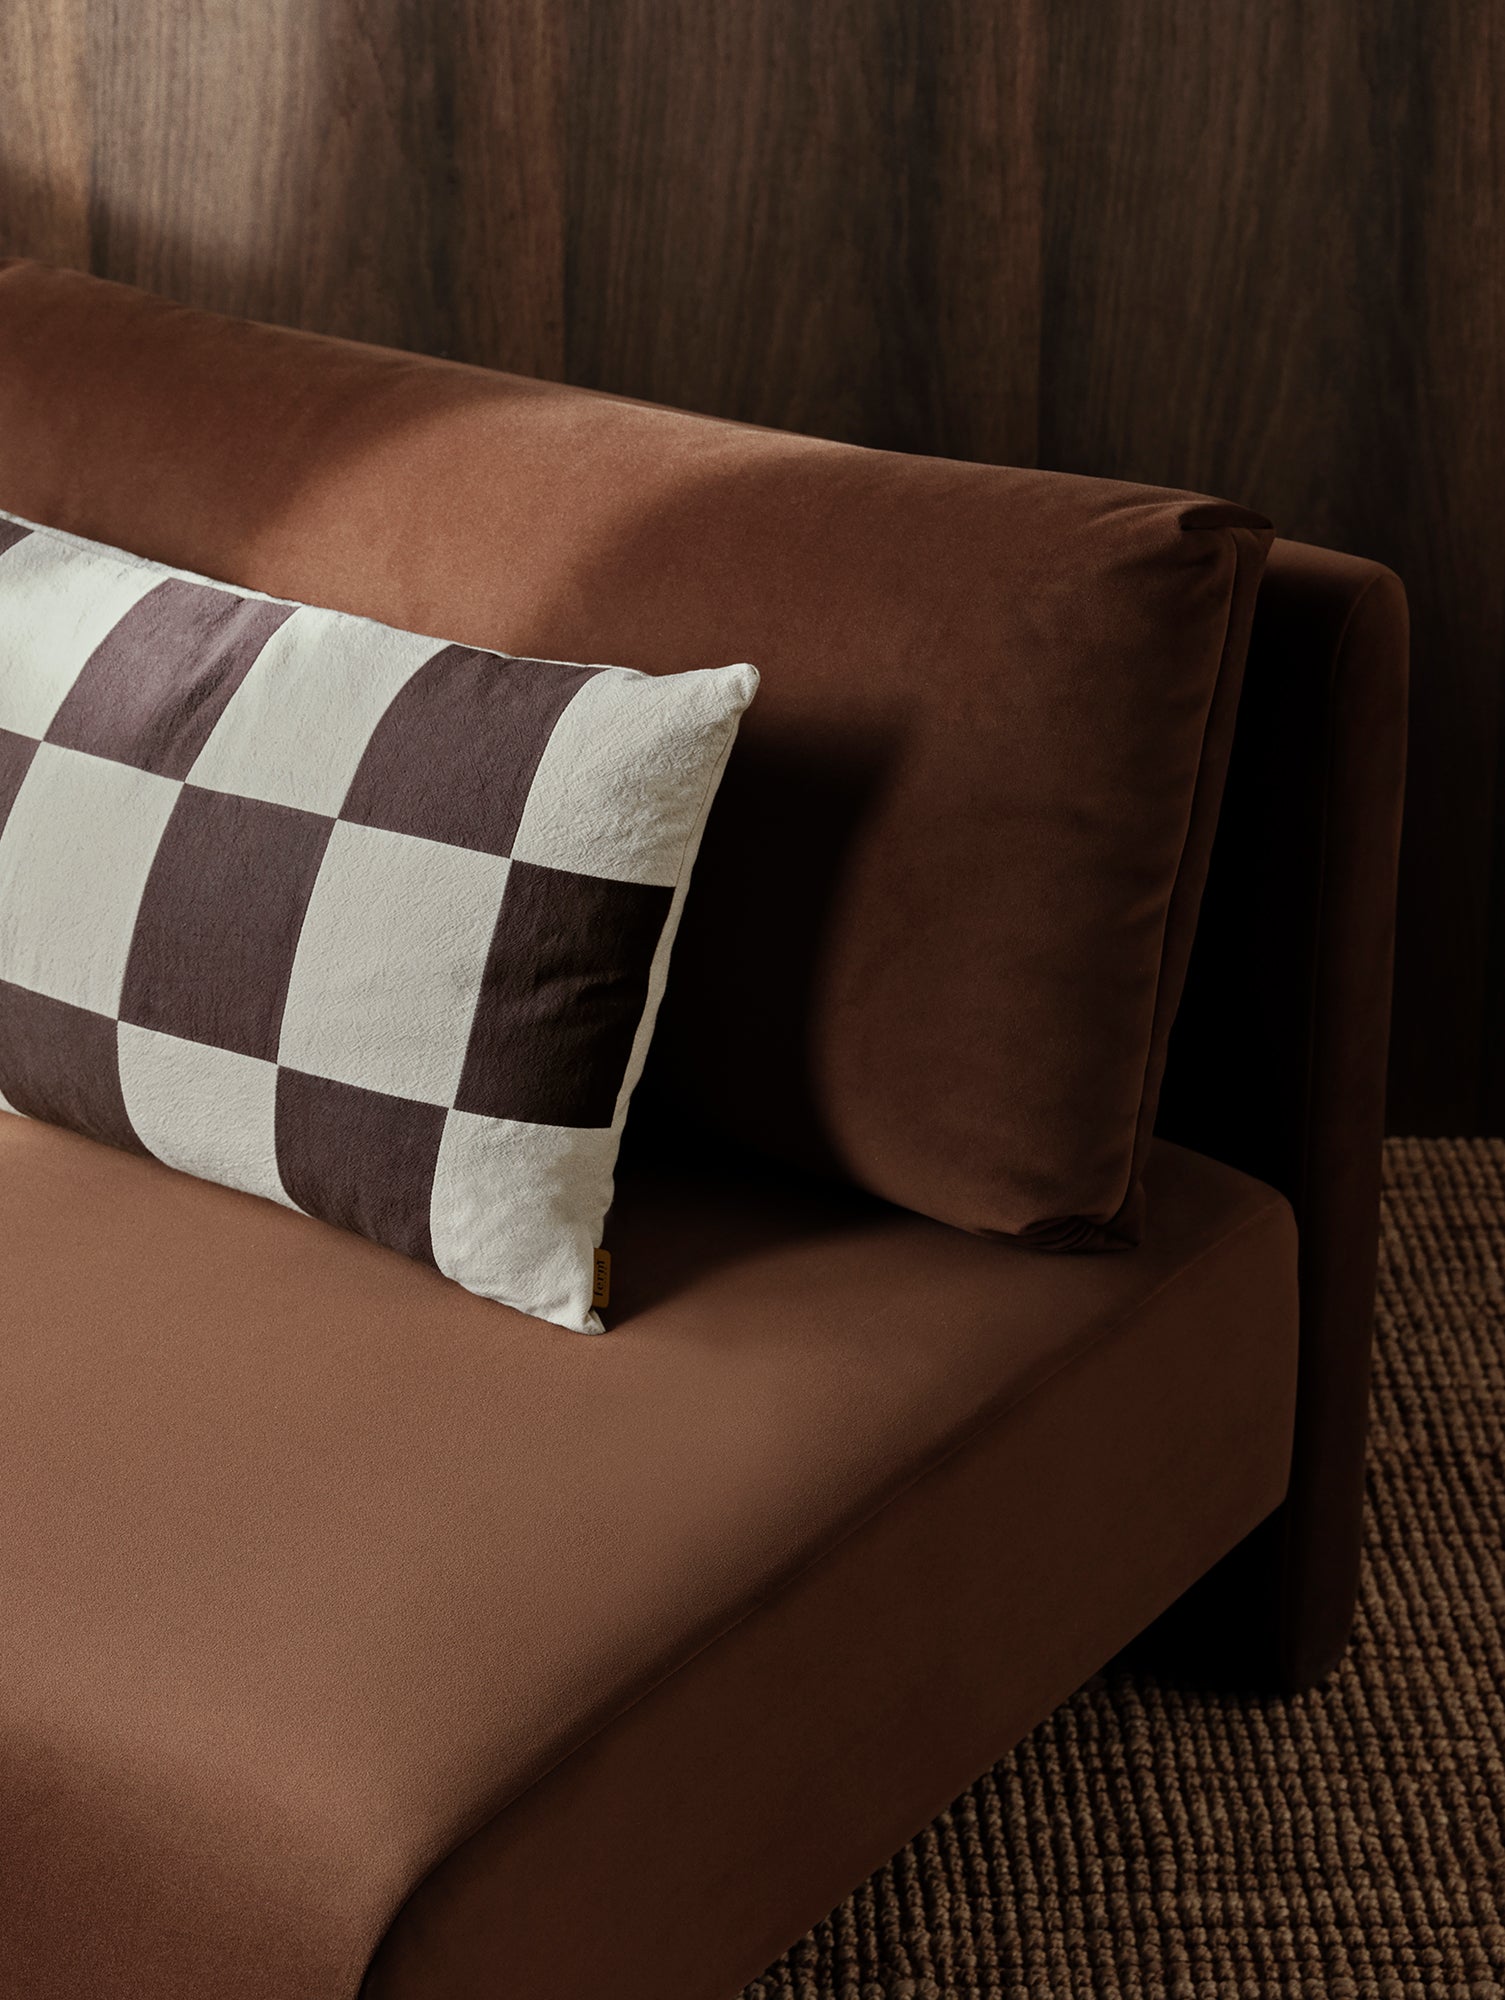 Dase 2-Seater Modular Sofa by Ferm Living - Rich Velvet Soft Brown